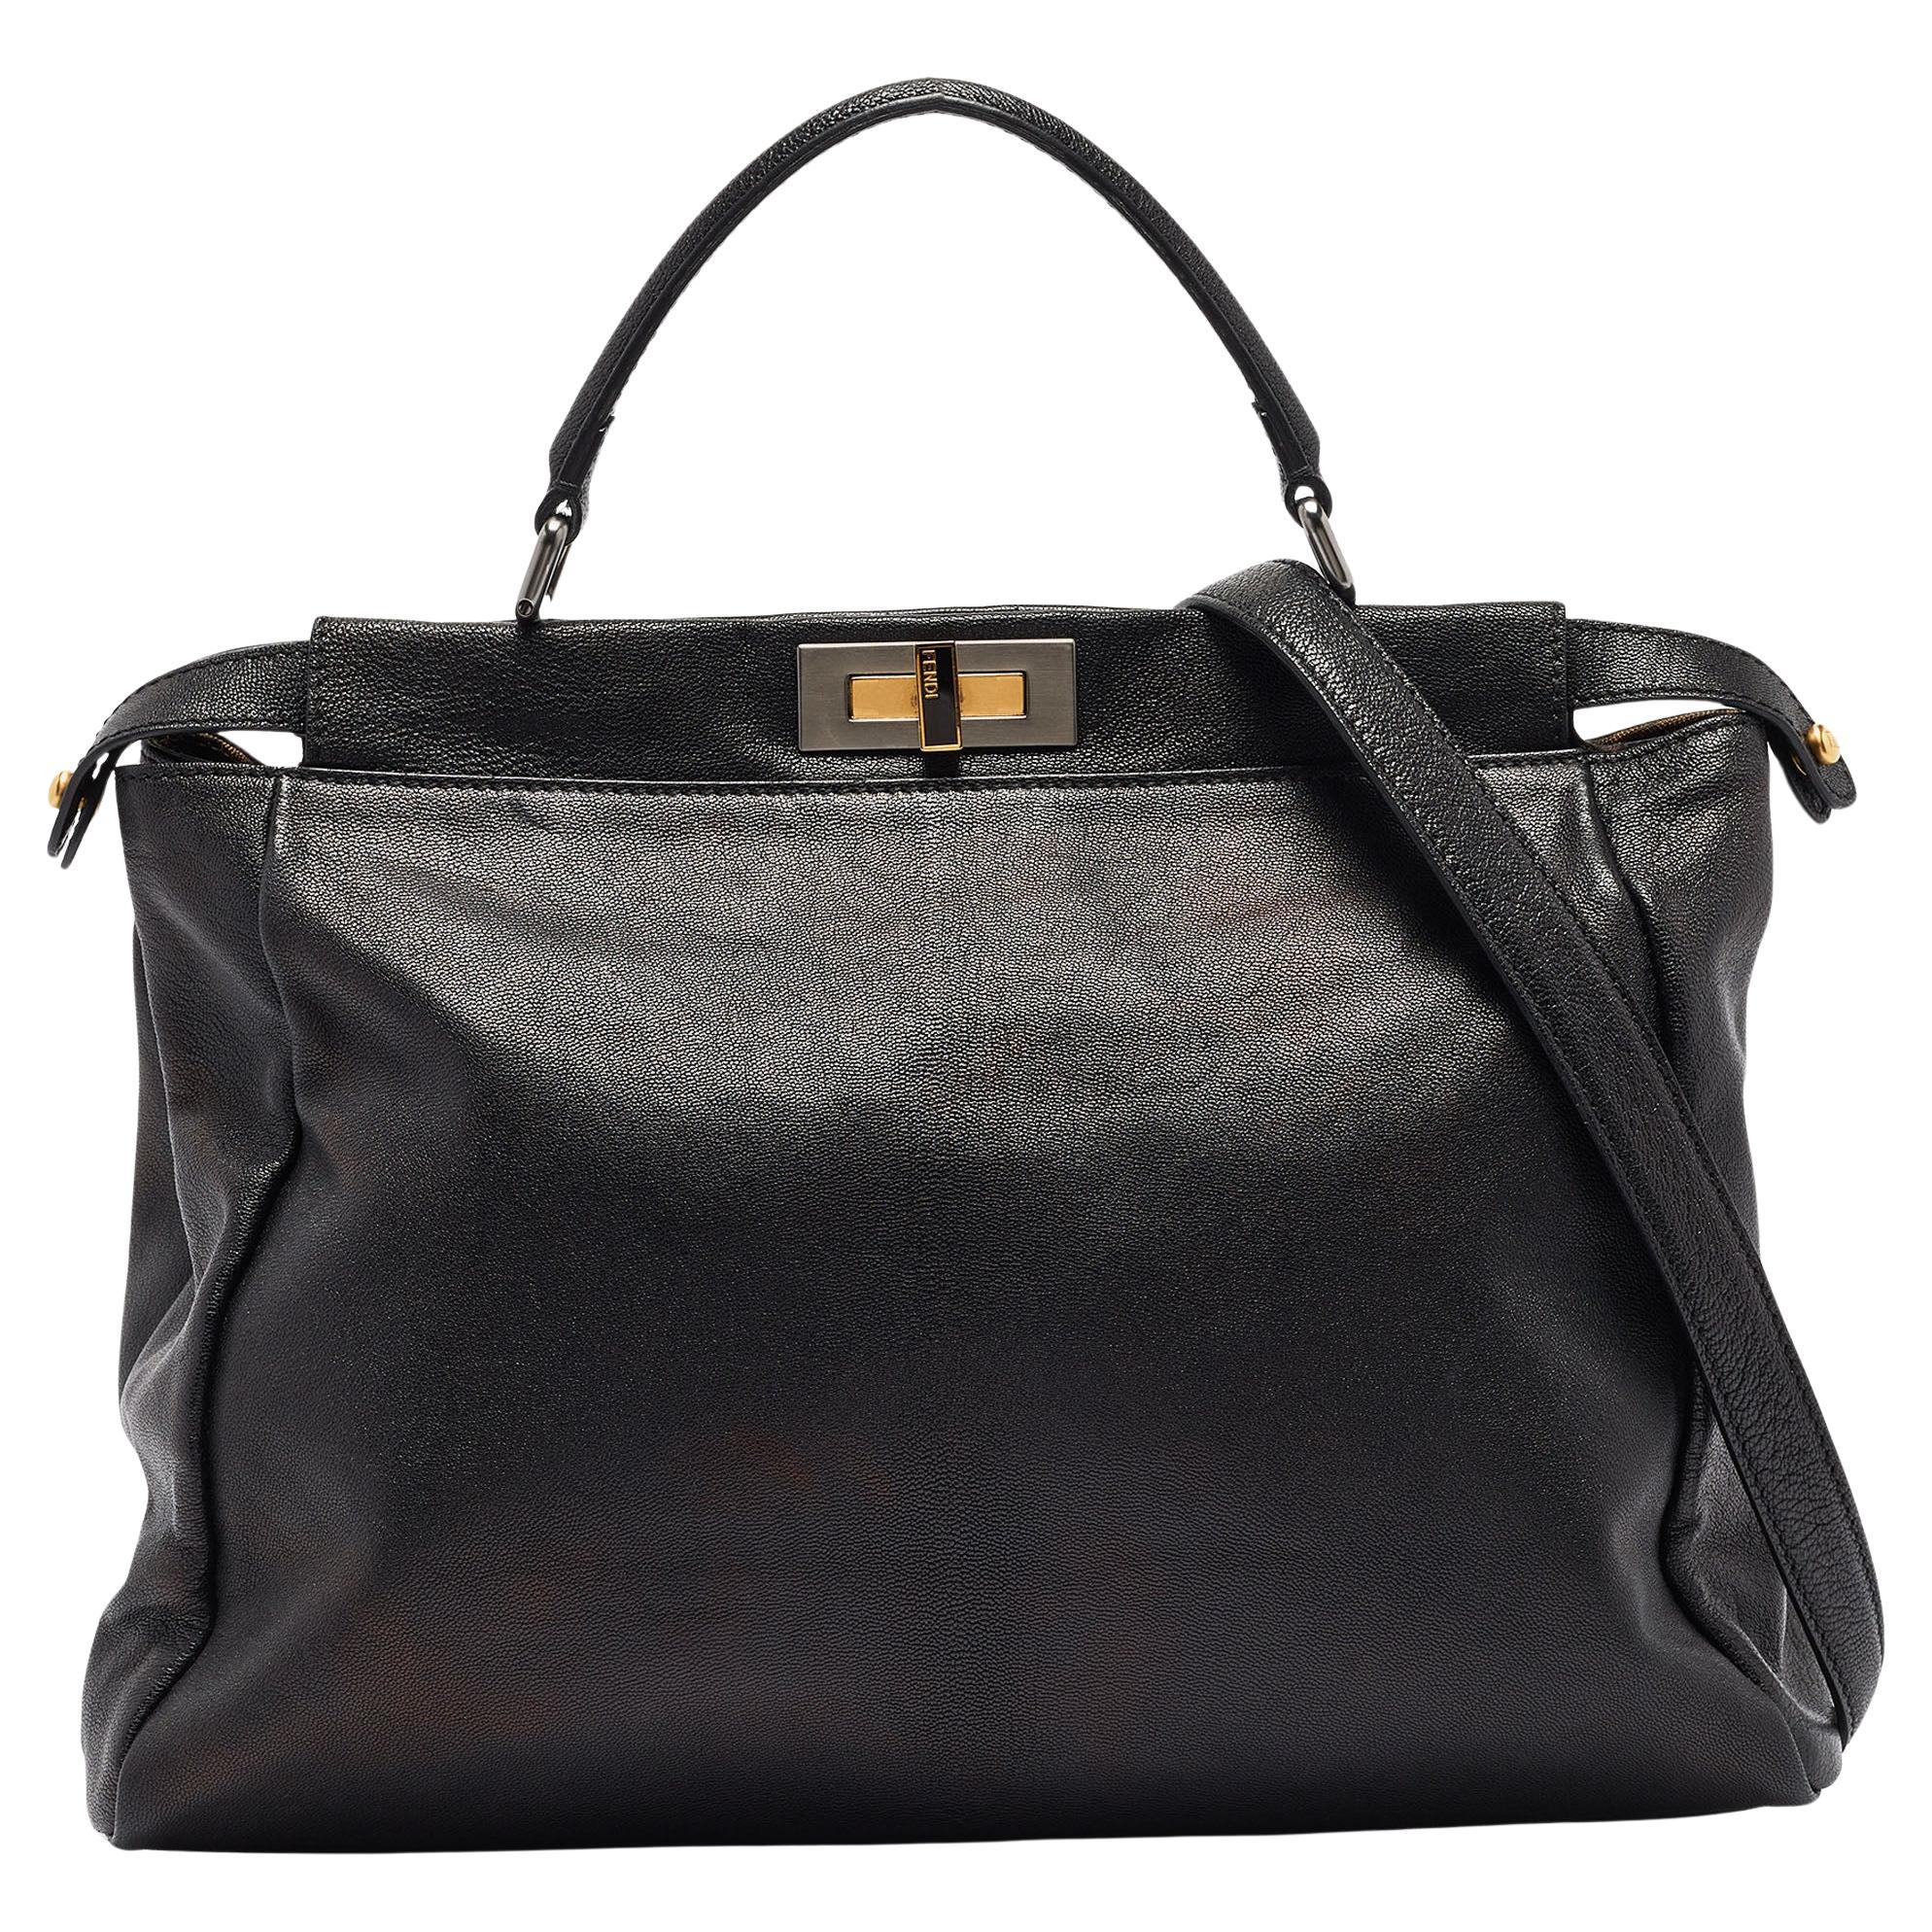 Fendi Black Leather Large Peekaboo Top Handle Bag For Sale